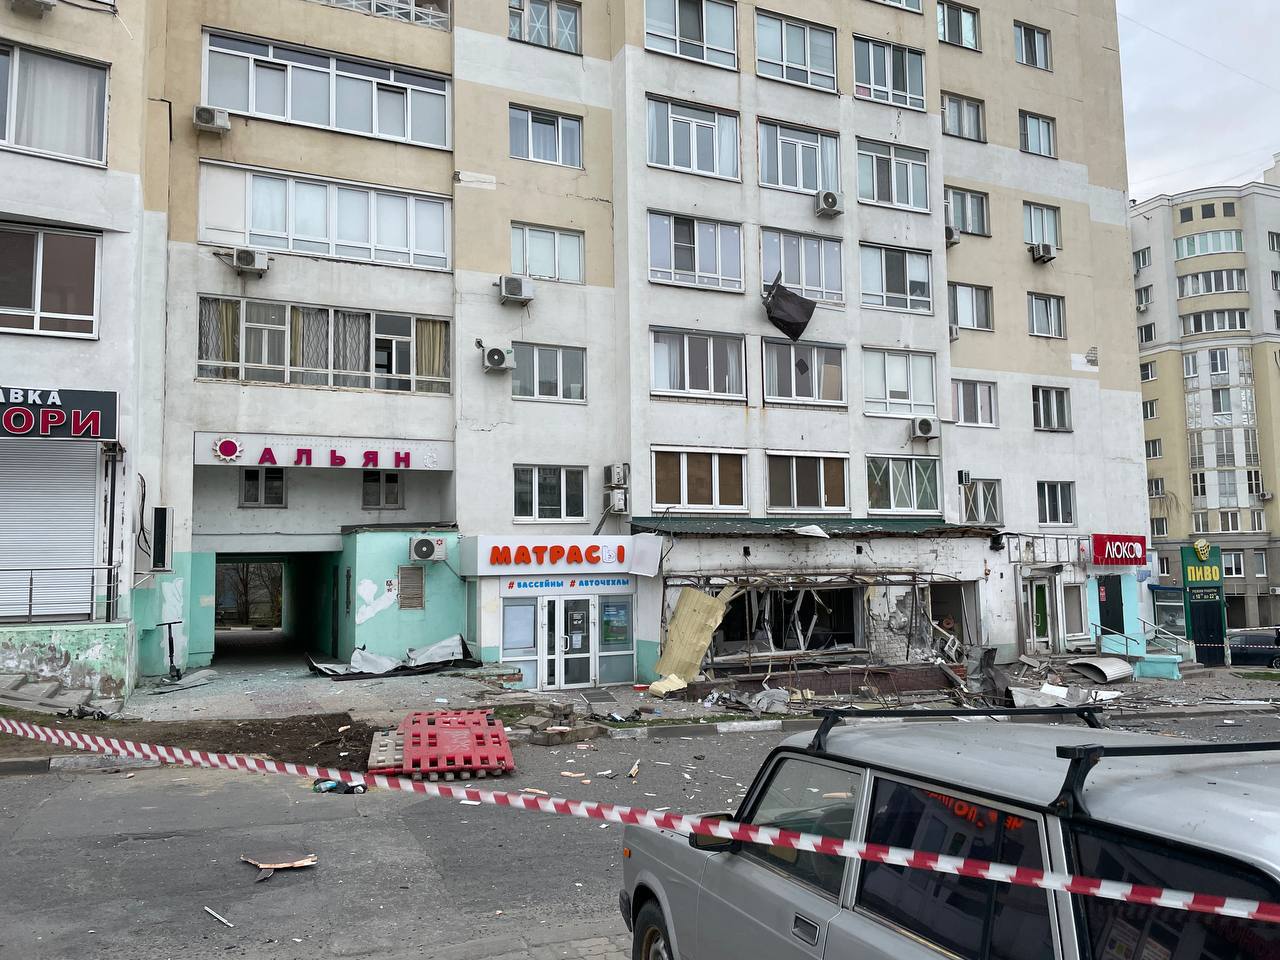 Russia claims Belgorod hit by Ukrainian rocket attack